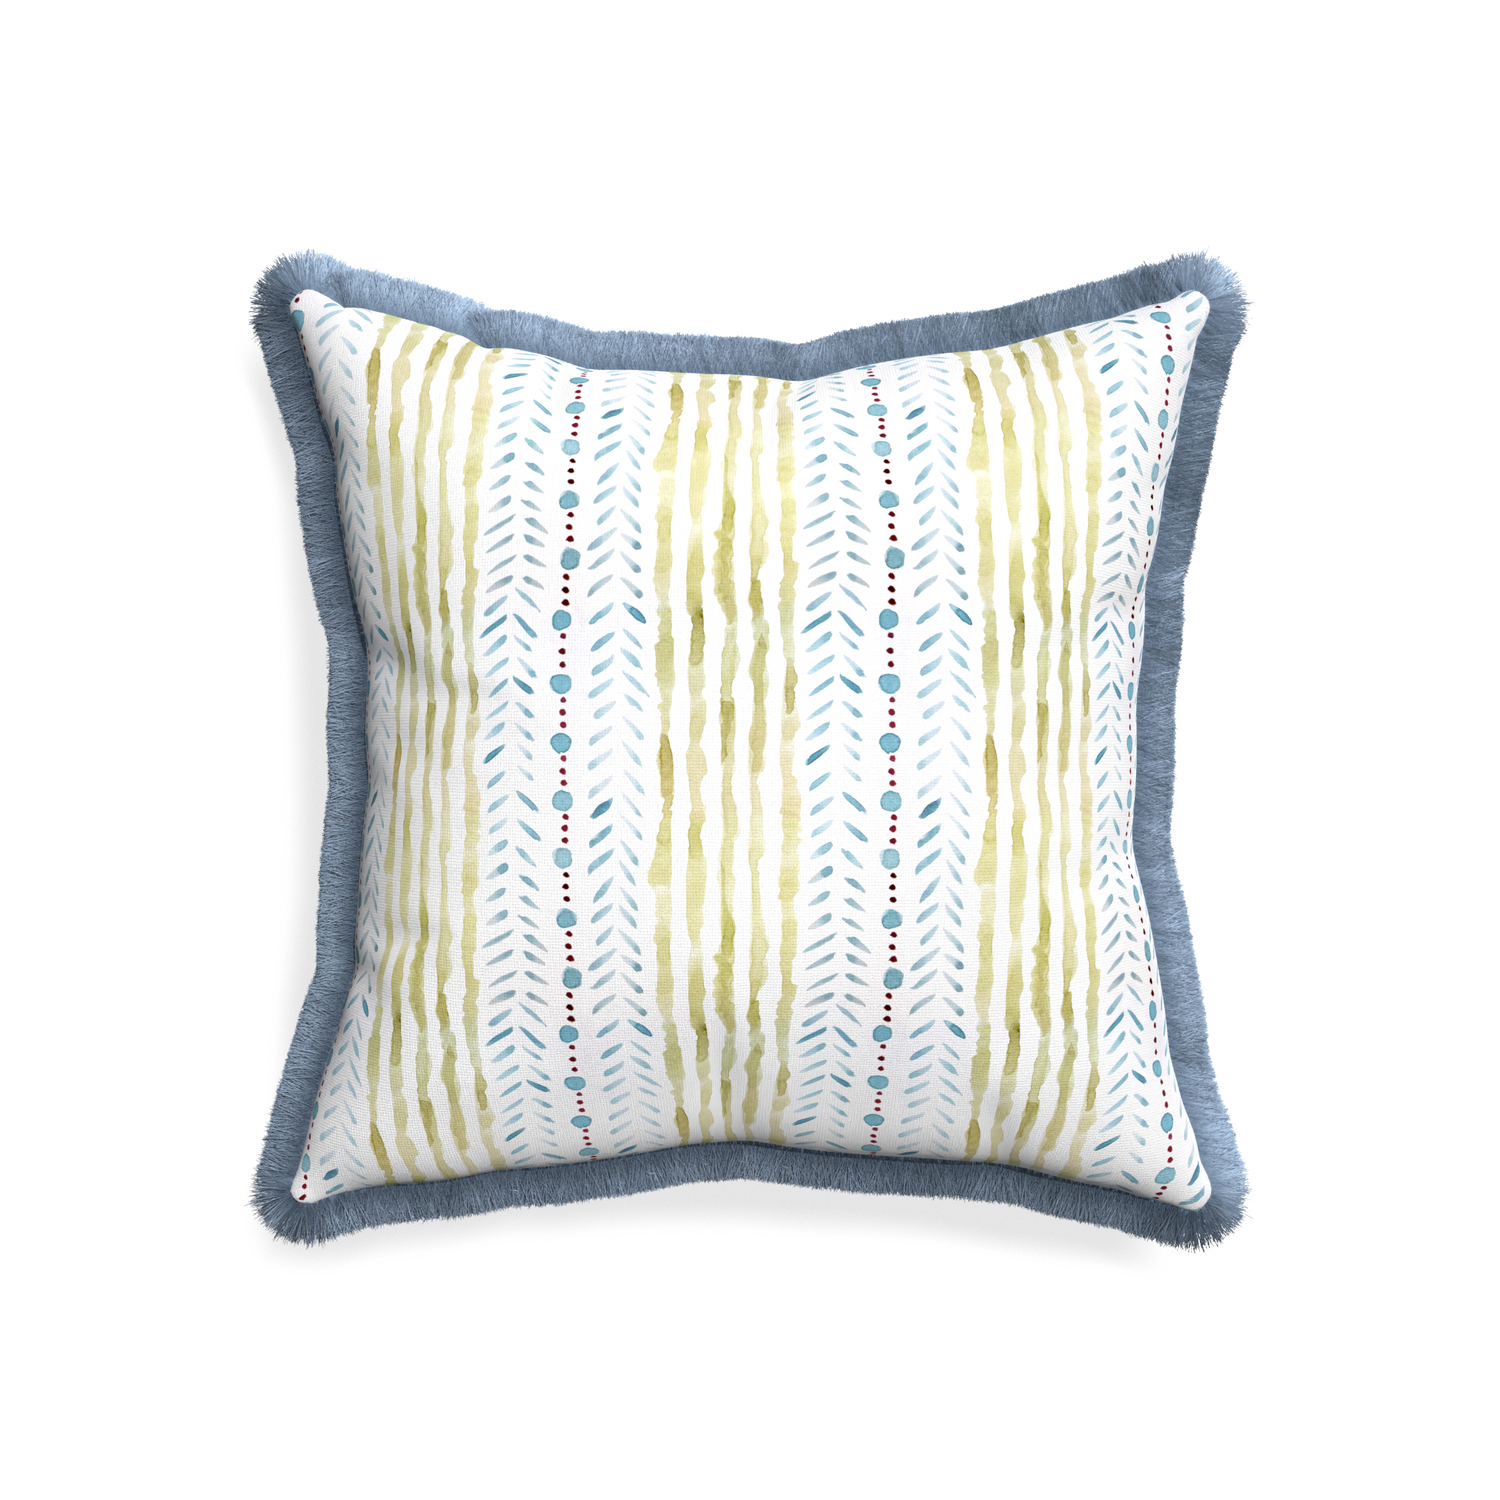 20-square julia custom pillow with sky fringe on white background